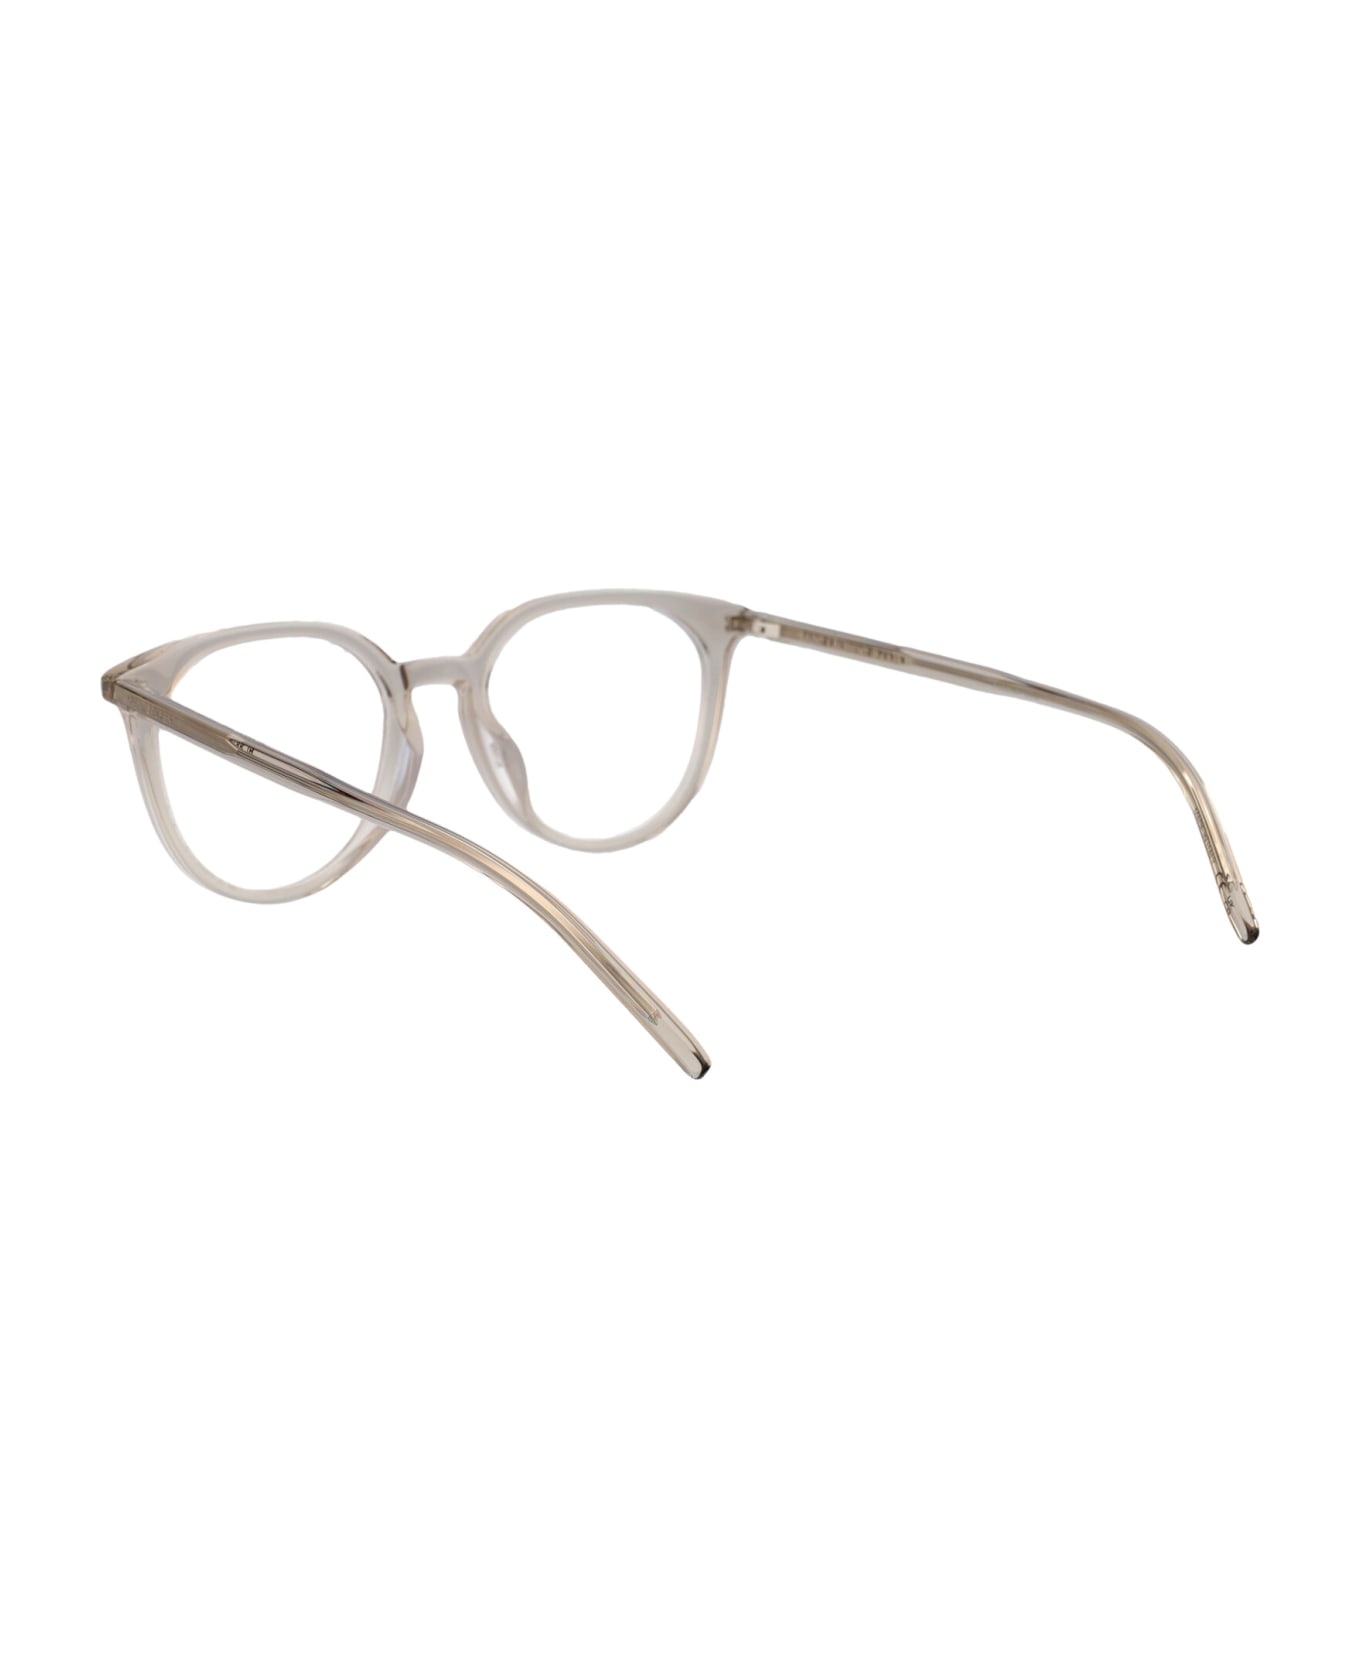 Saint Laurent Eyewear Sl 681/f Glasses - 003 BEIGE BEIGE TRANSPARENT